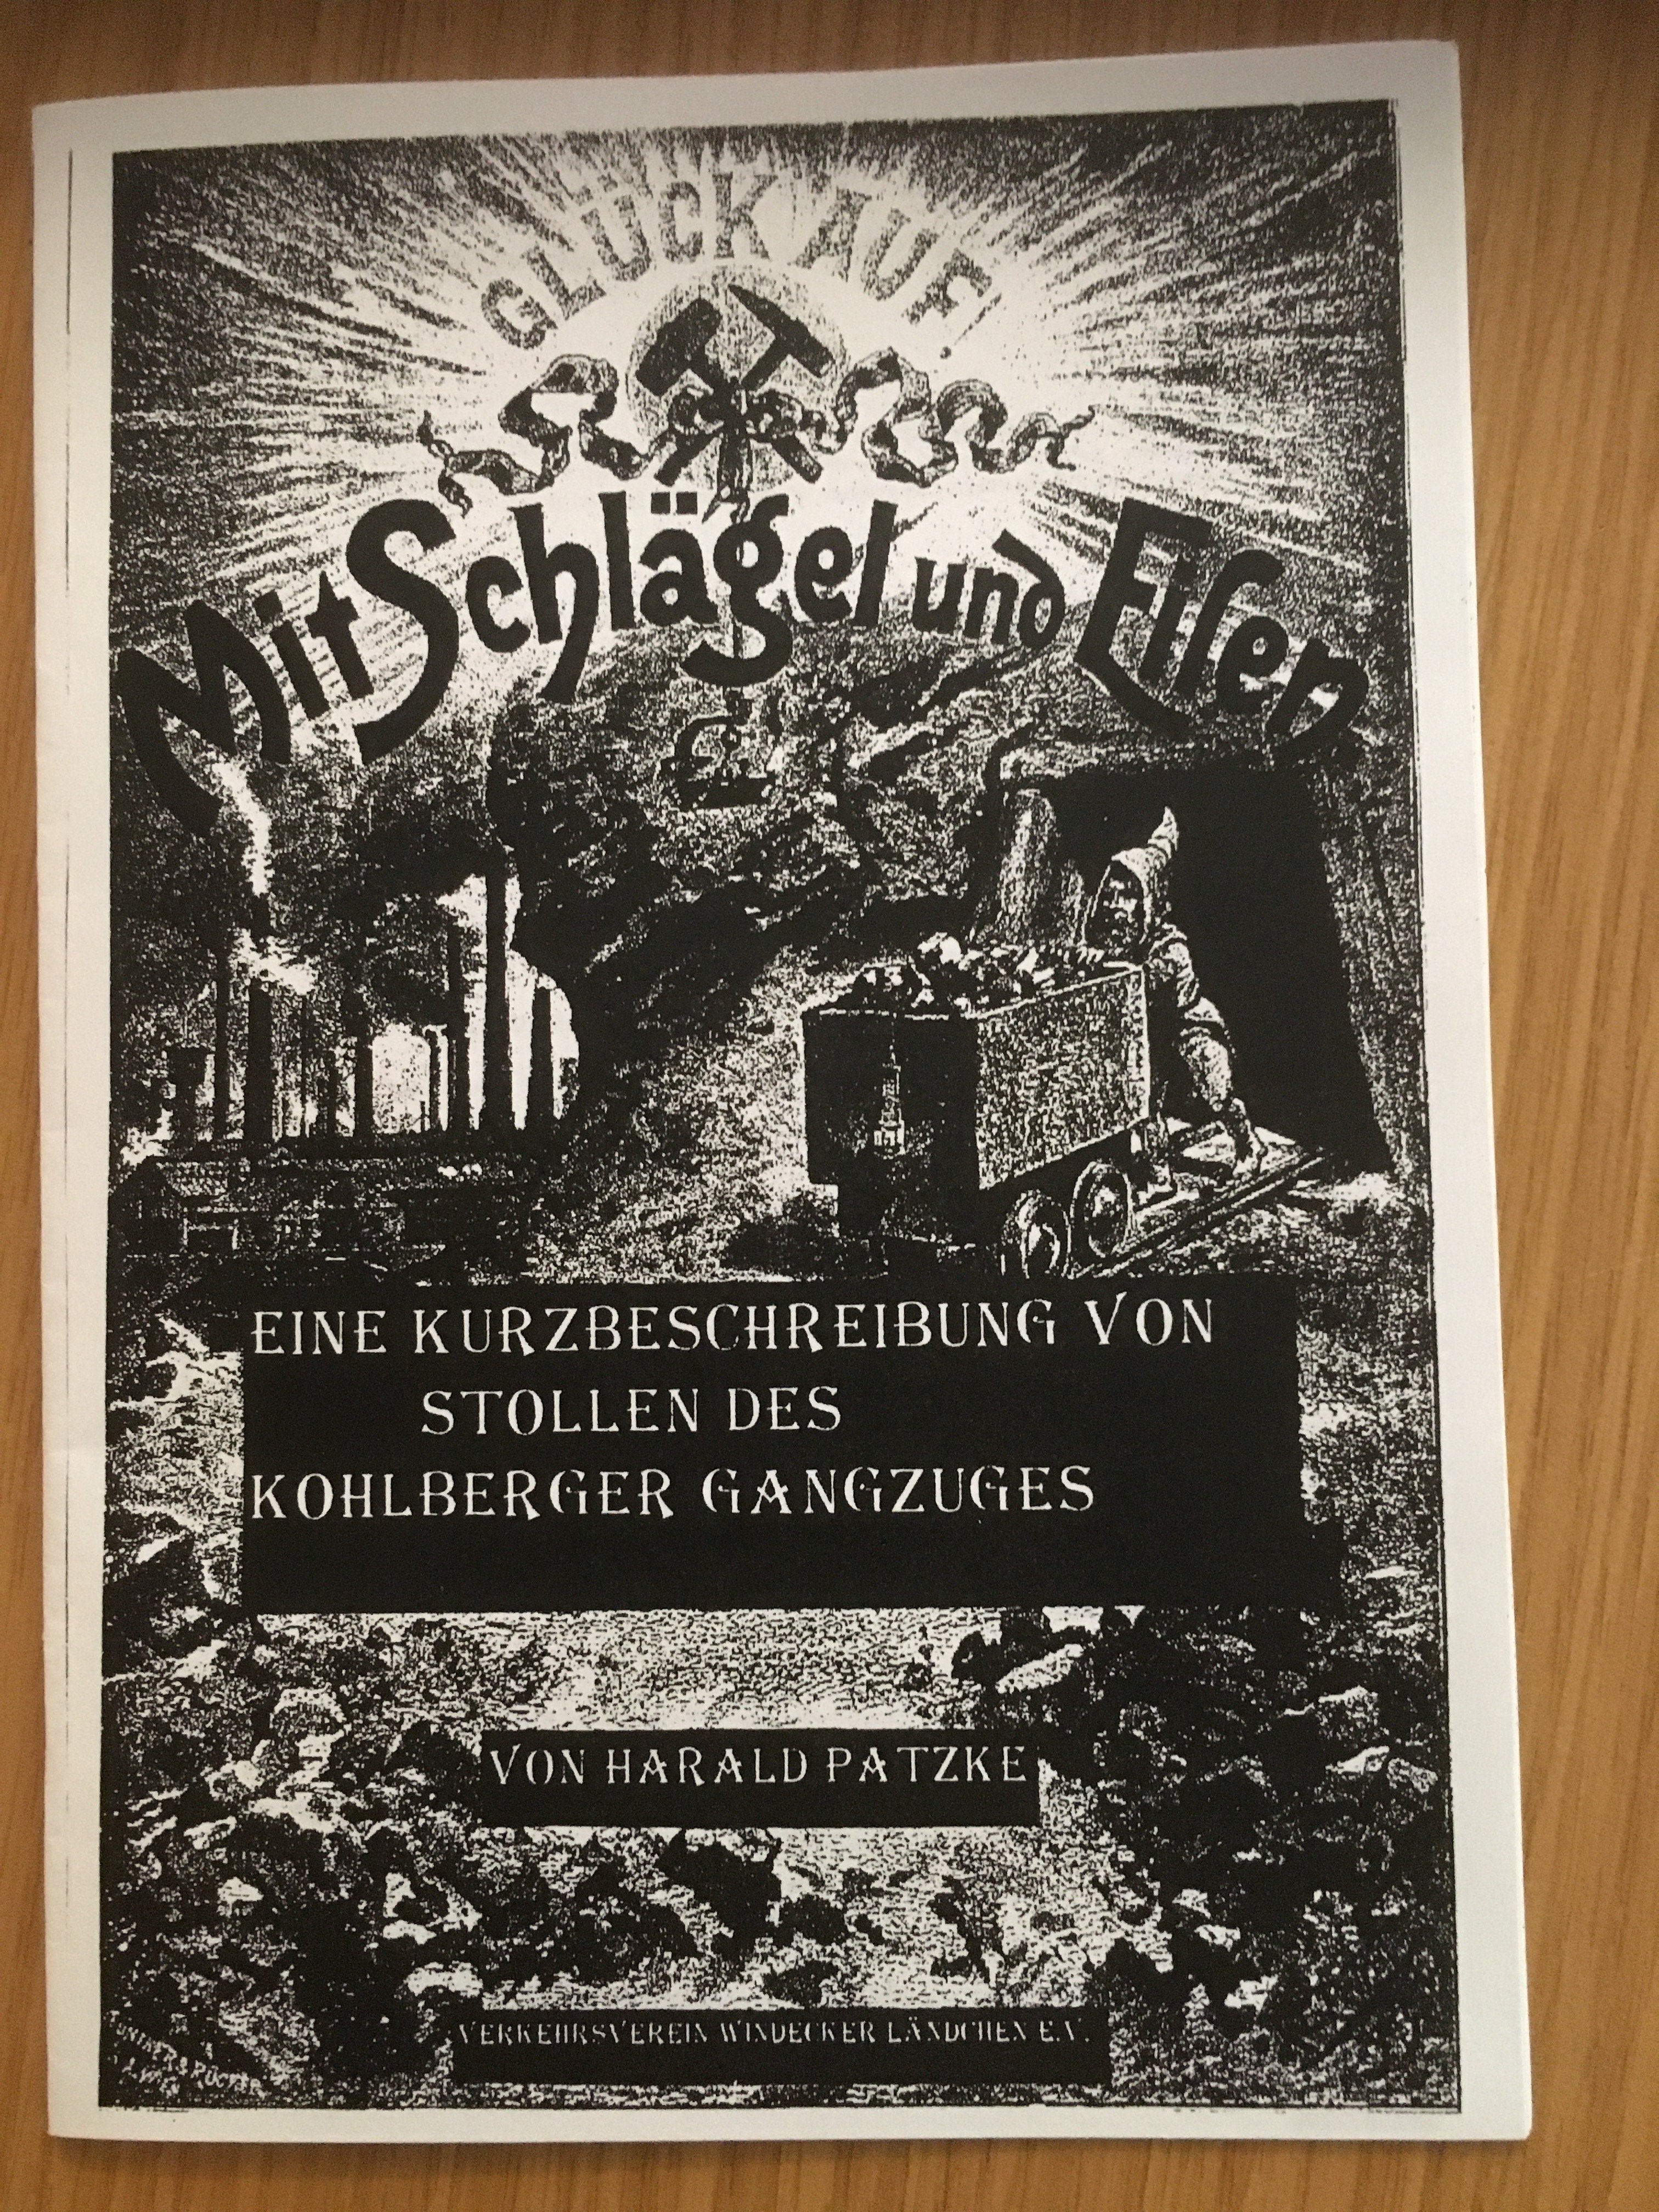 hgf (Besucherbergwerk und Bergbaumuseum "Grube Silberhardt" CC BY-NC-SA)